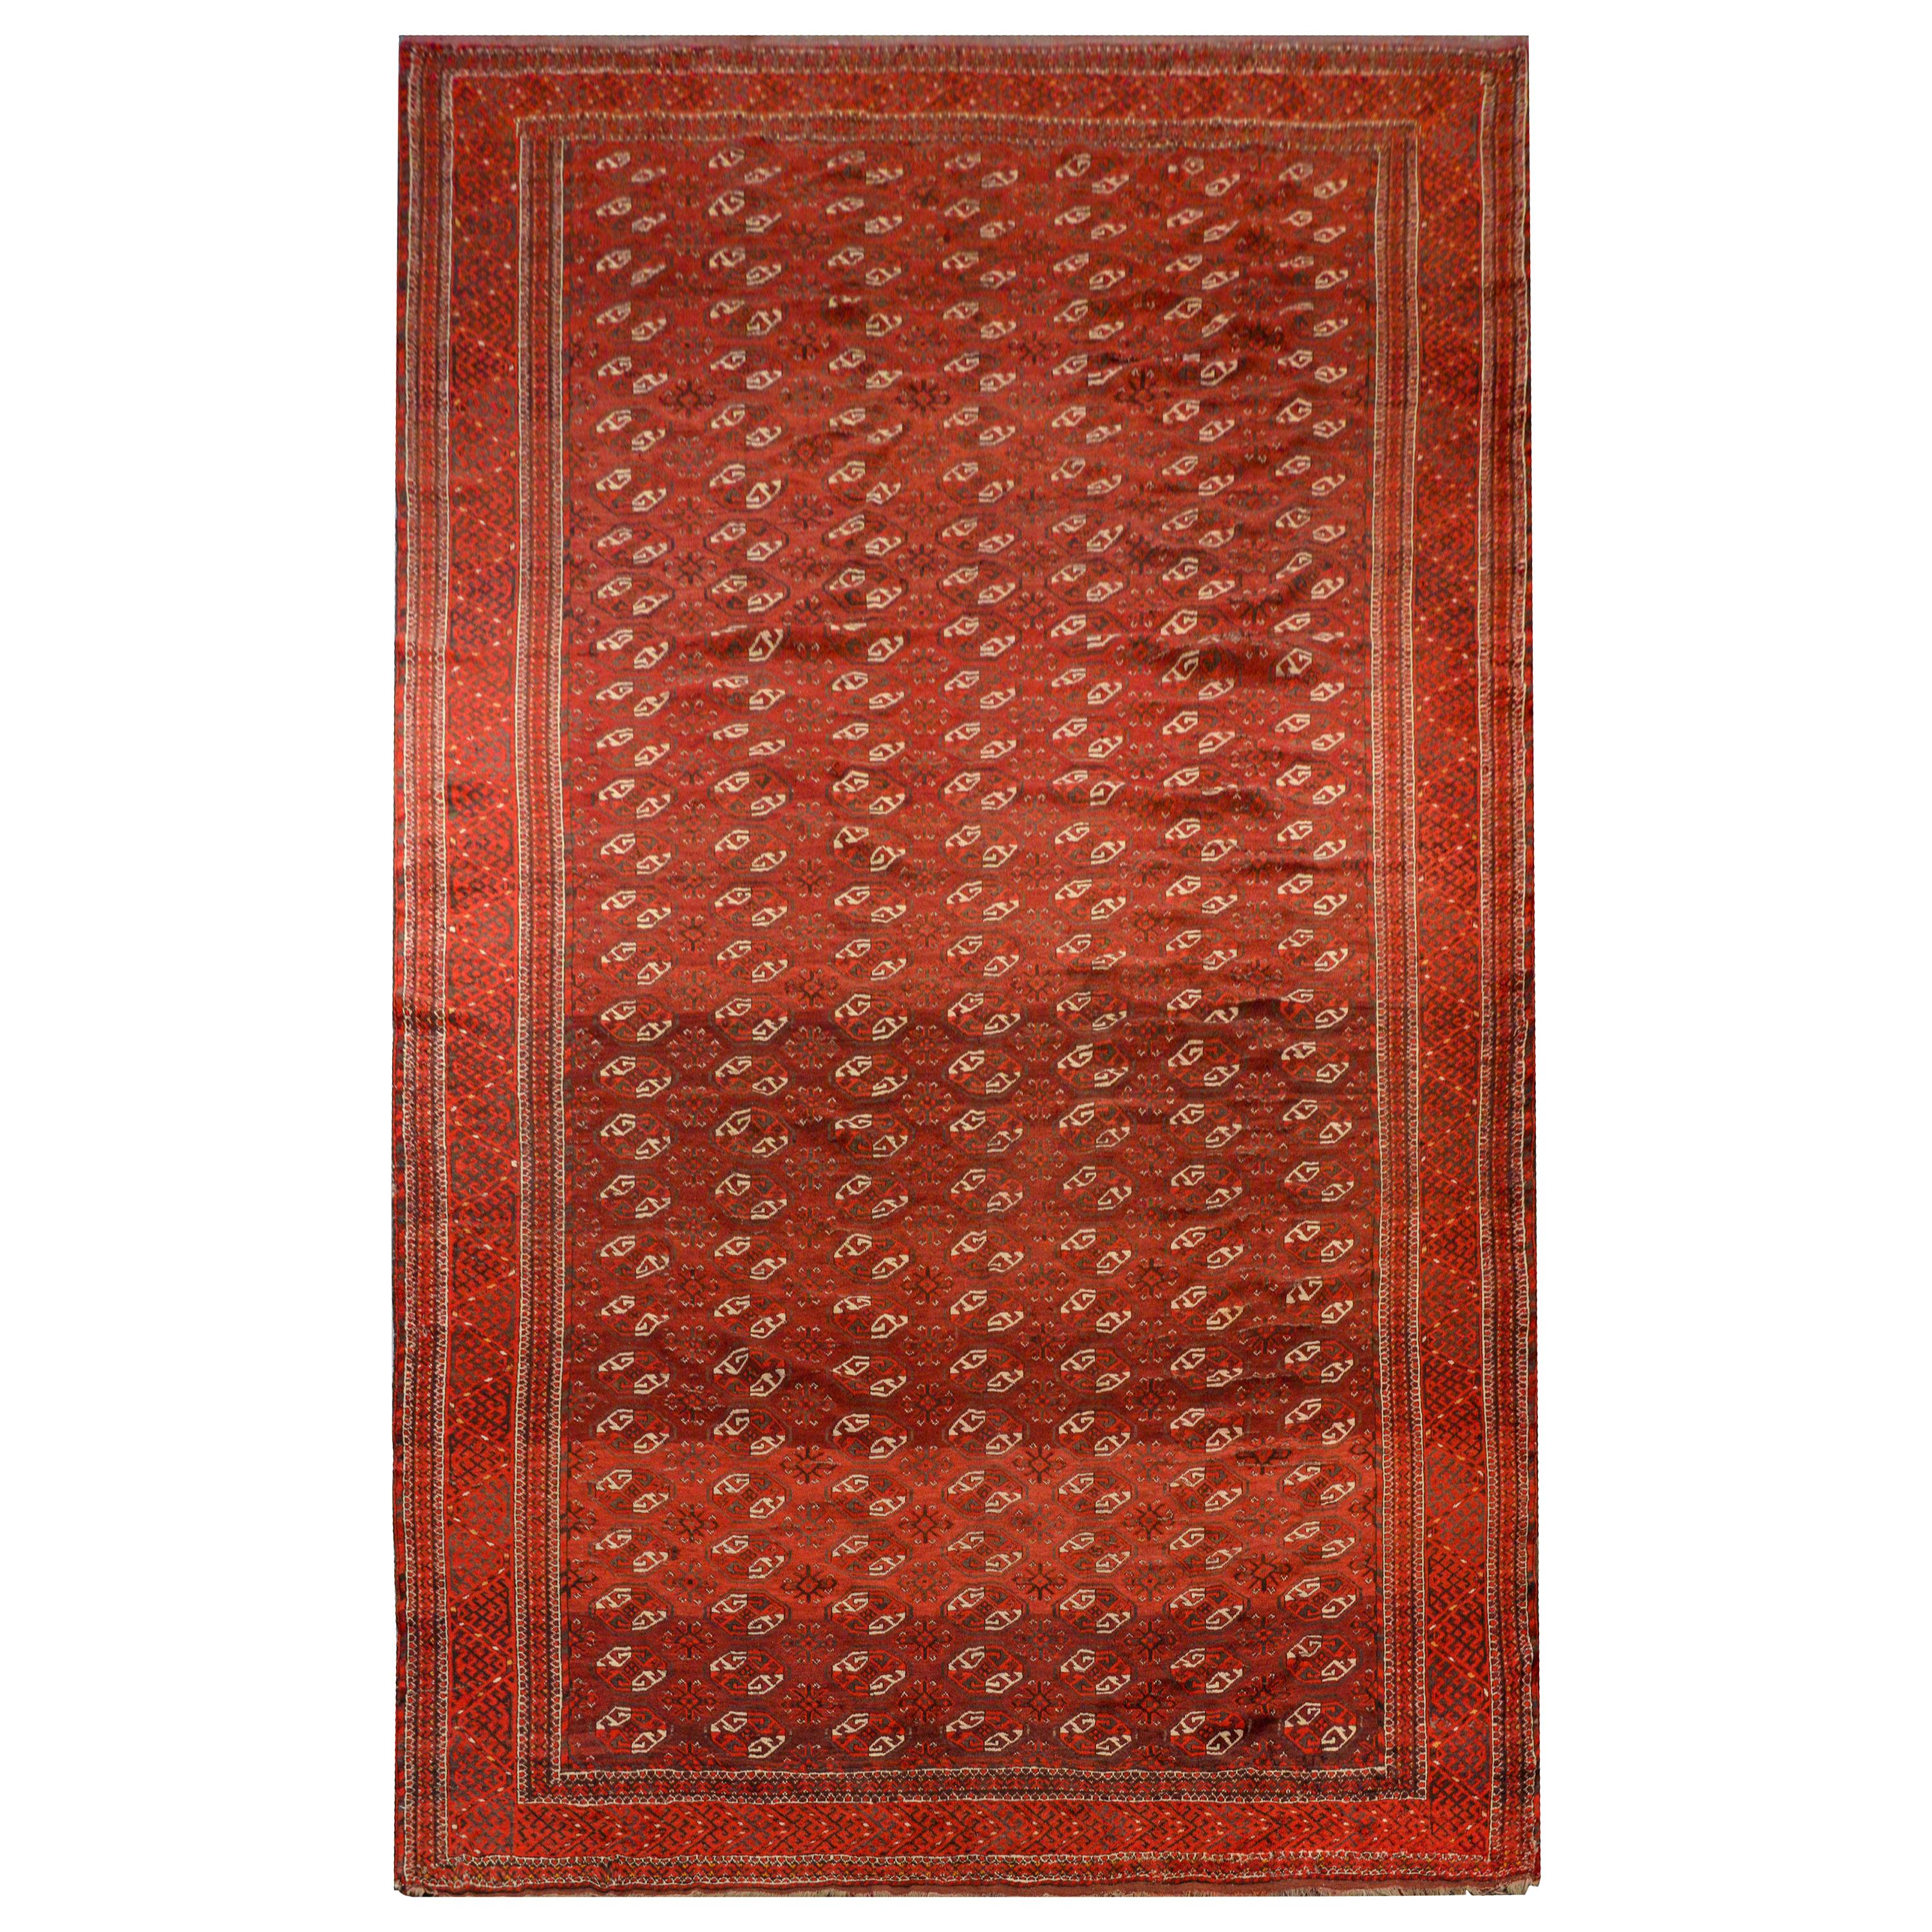 Wonderful Early 20th Century Turkomen Rug For Sale